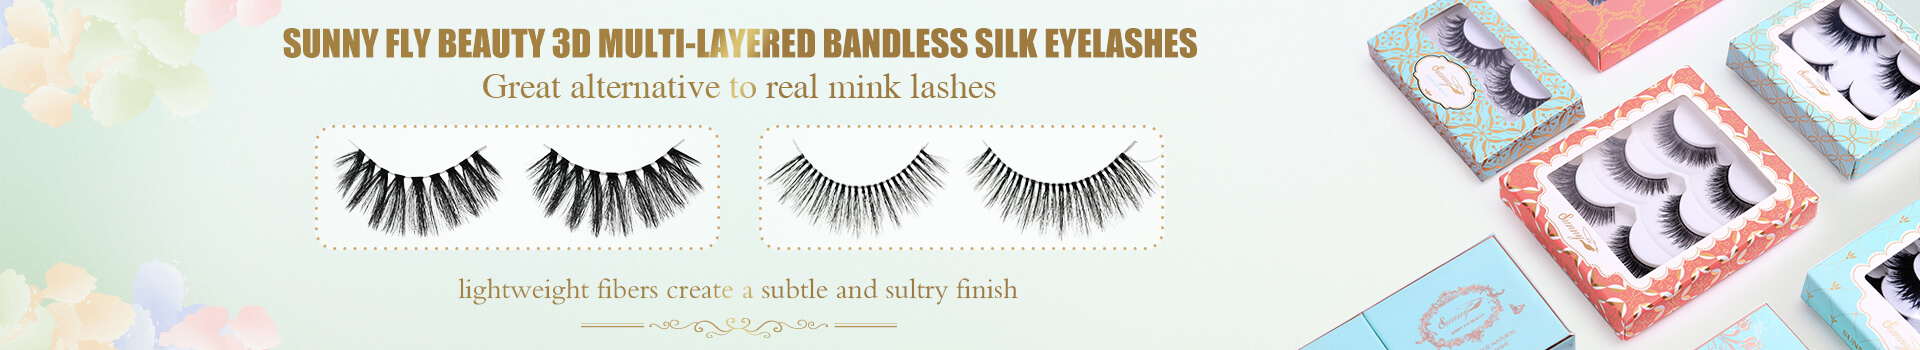 3D Multi-Layered Bandless Silk Eyelas TA13